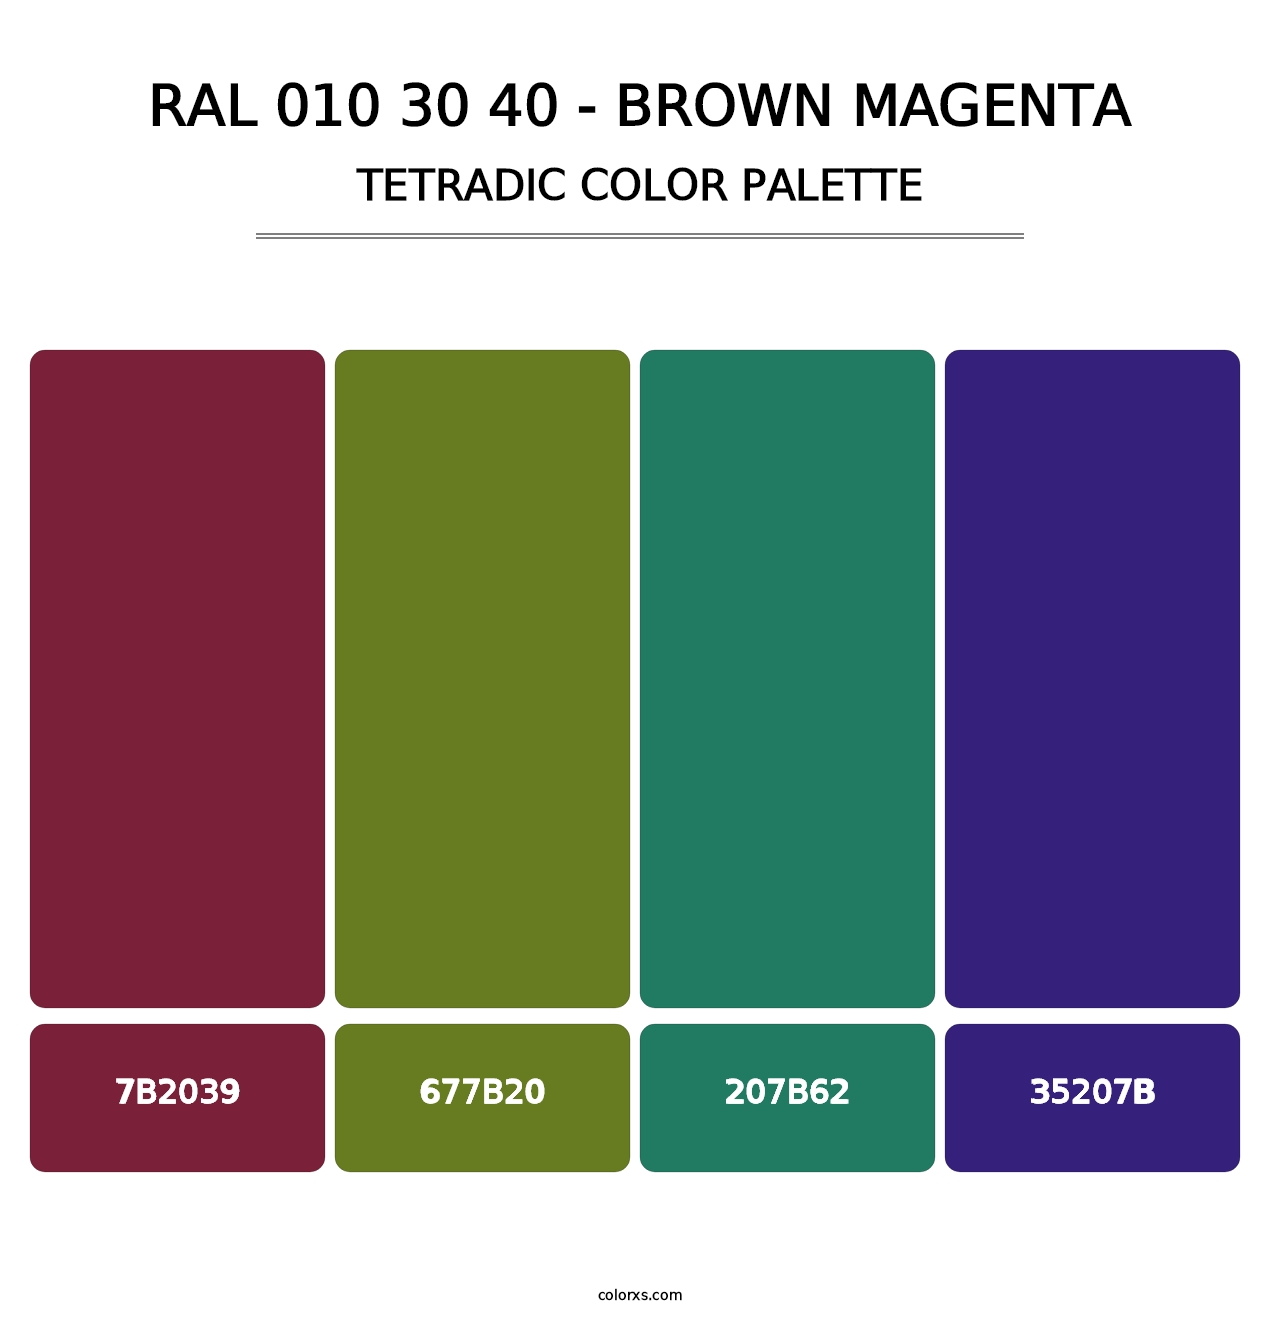 RAL 010 30 40 - Brown Magenta - Tetradic Color Palette